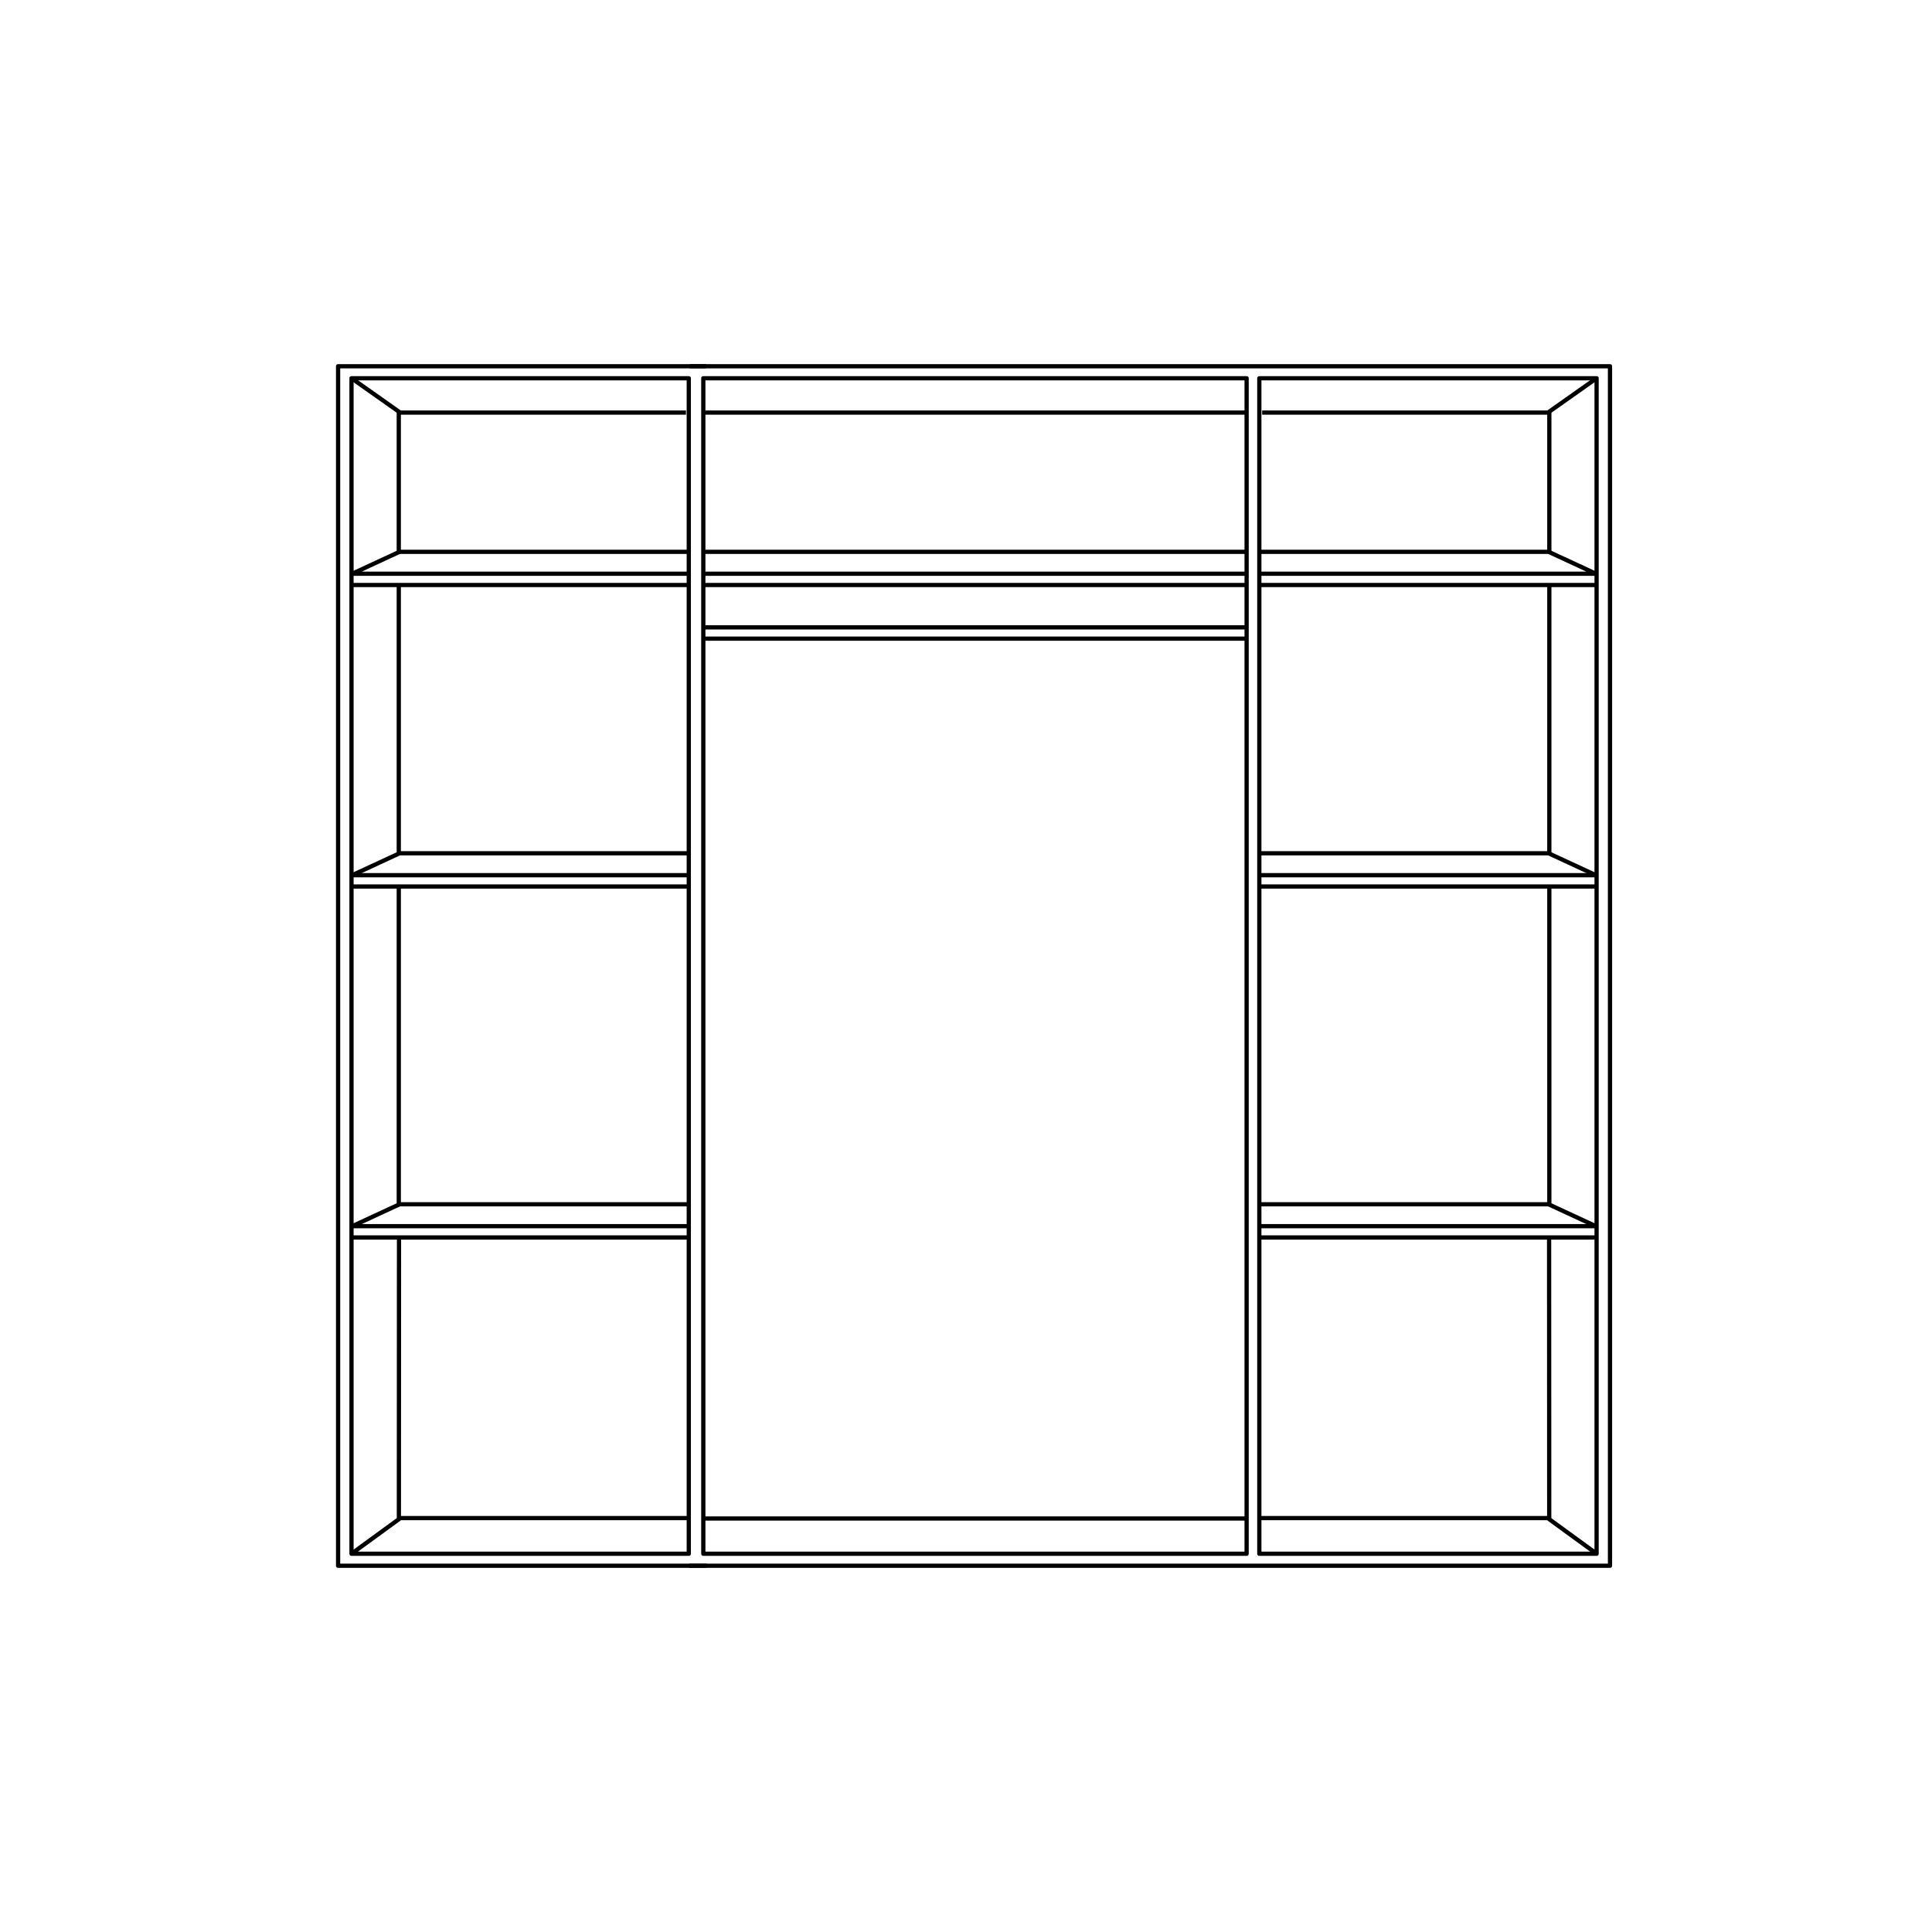 KLEIDERSCHRANK 4-türig Kiefer massiv Grau, Weiß  - Weiß/Grau, Design, Glas/Holz (253/219/63cm) - Carryhome